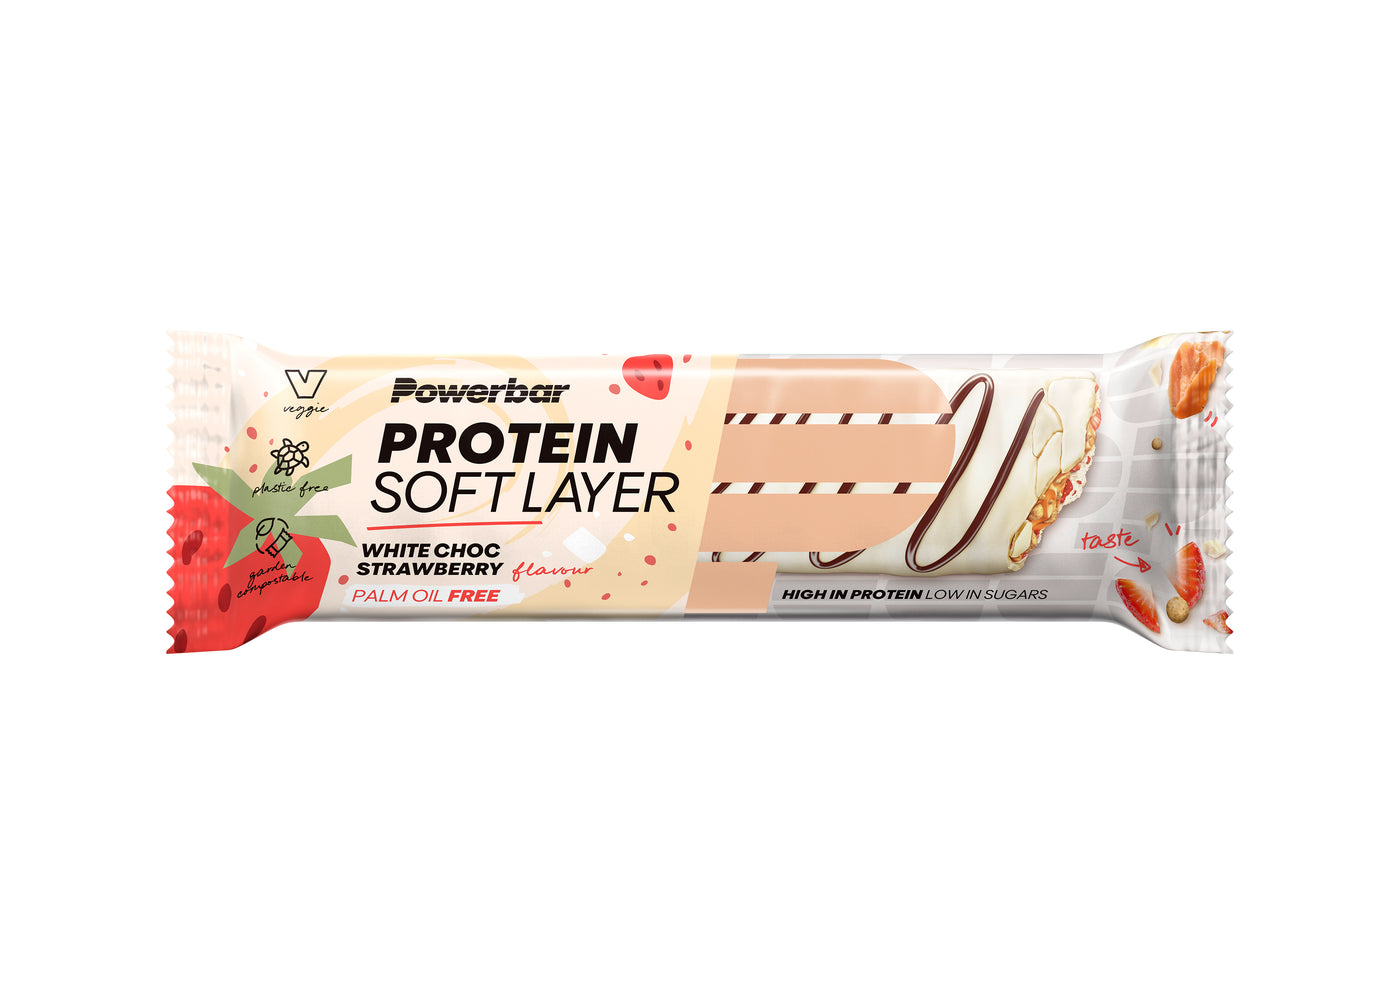 Protein bar, Soft Layer